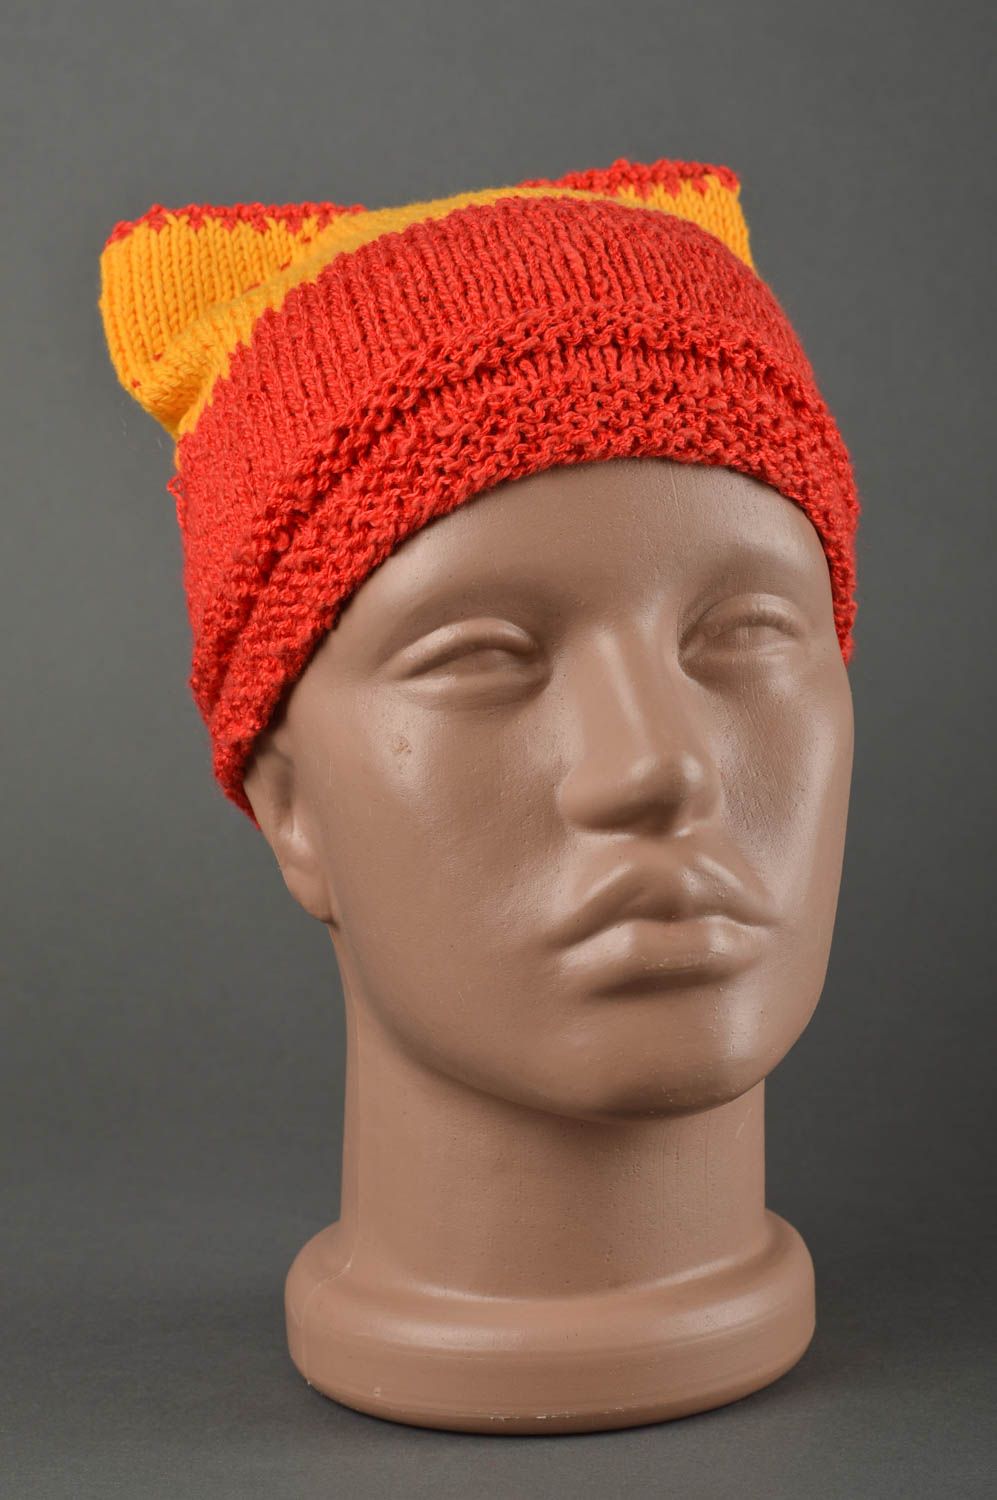 Handmade crochet hat warm hat baby hats kids clothing kids accessories photo 1